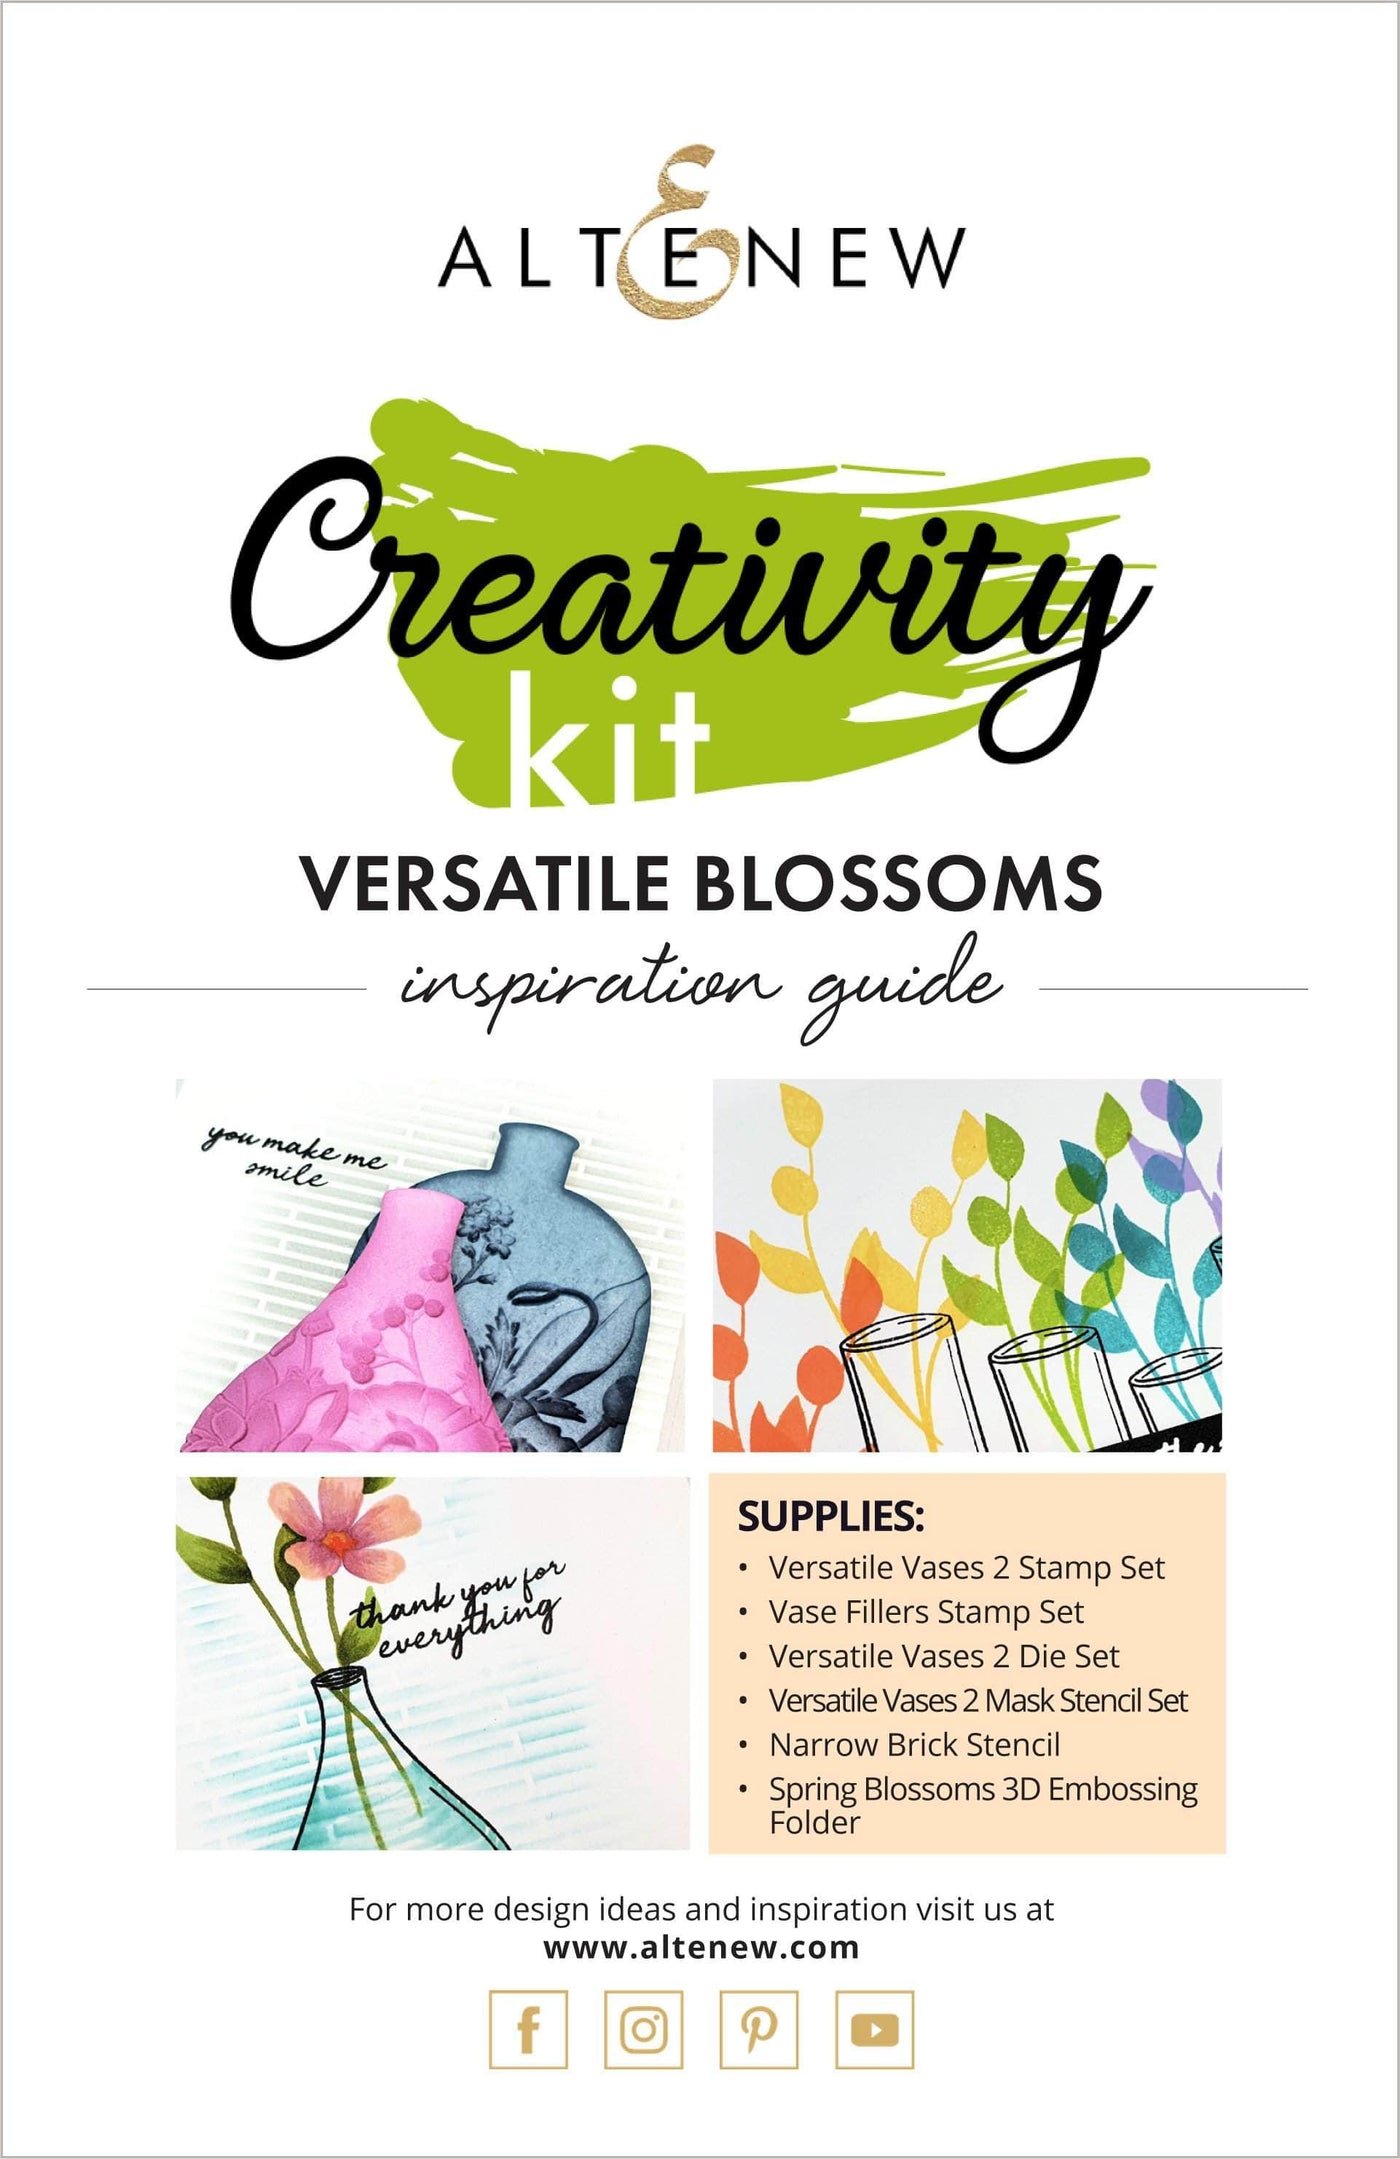 Printed Media Versatile Blossoms Creativity Cardmaking Kit Inspiration Guide